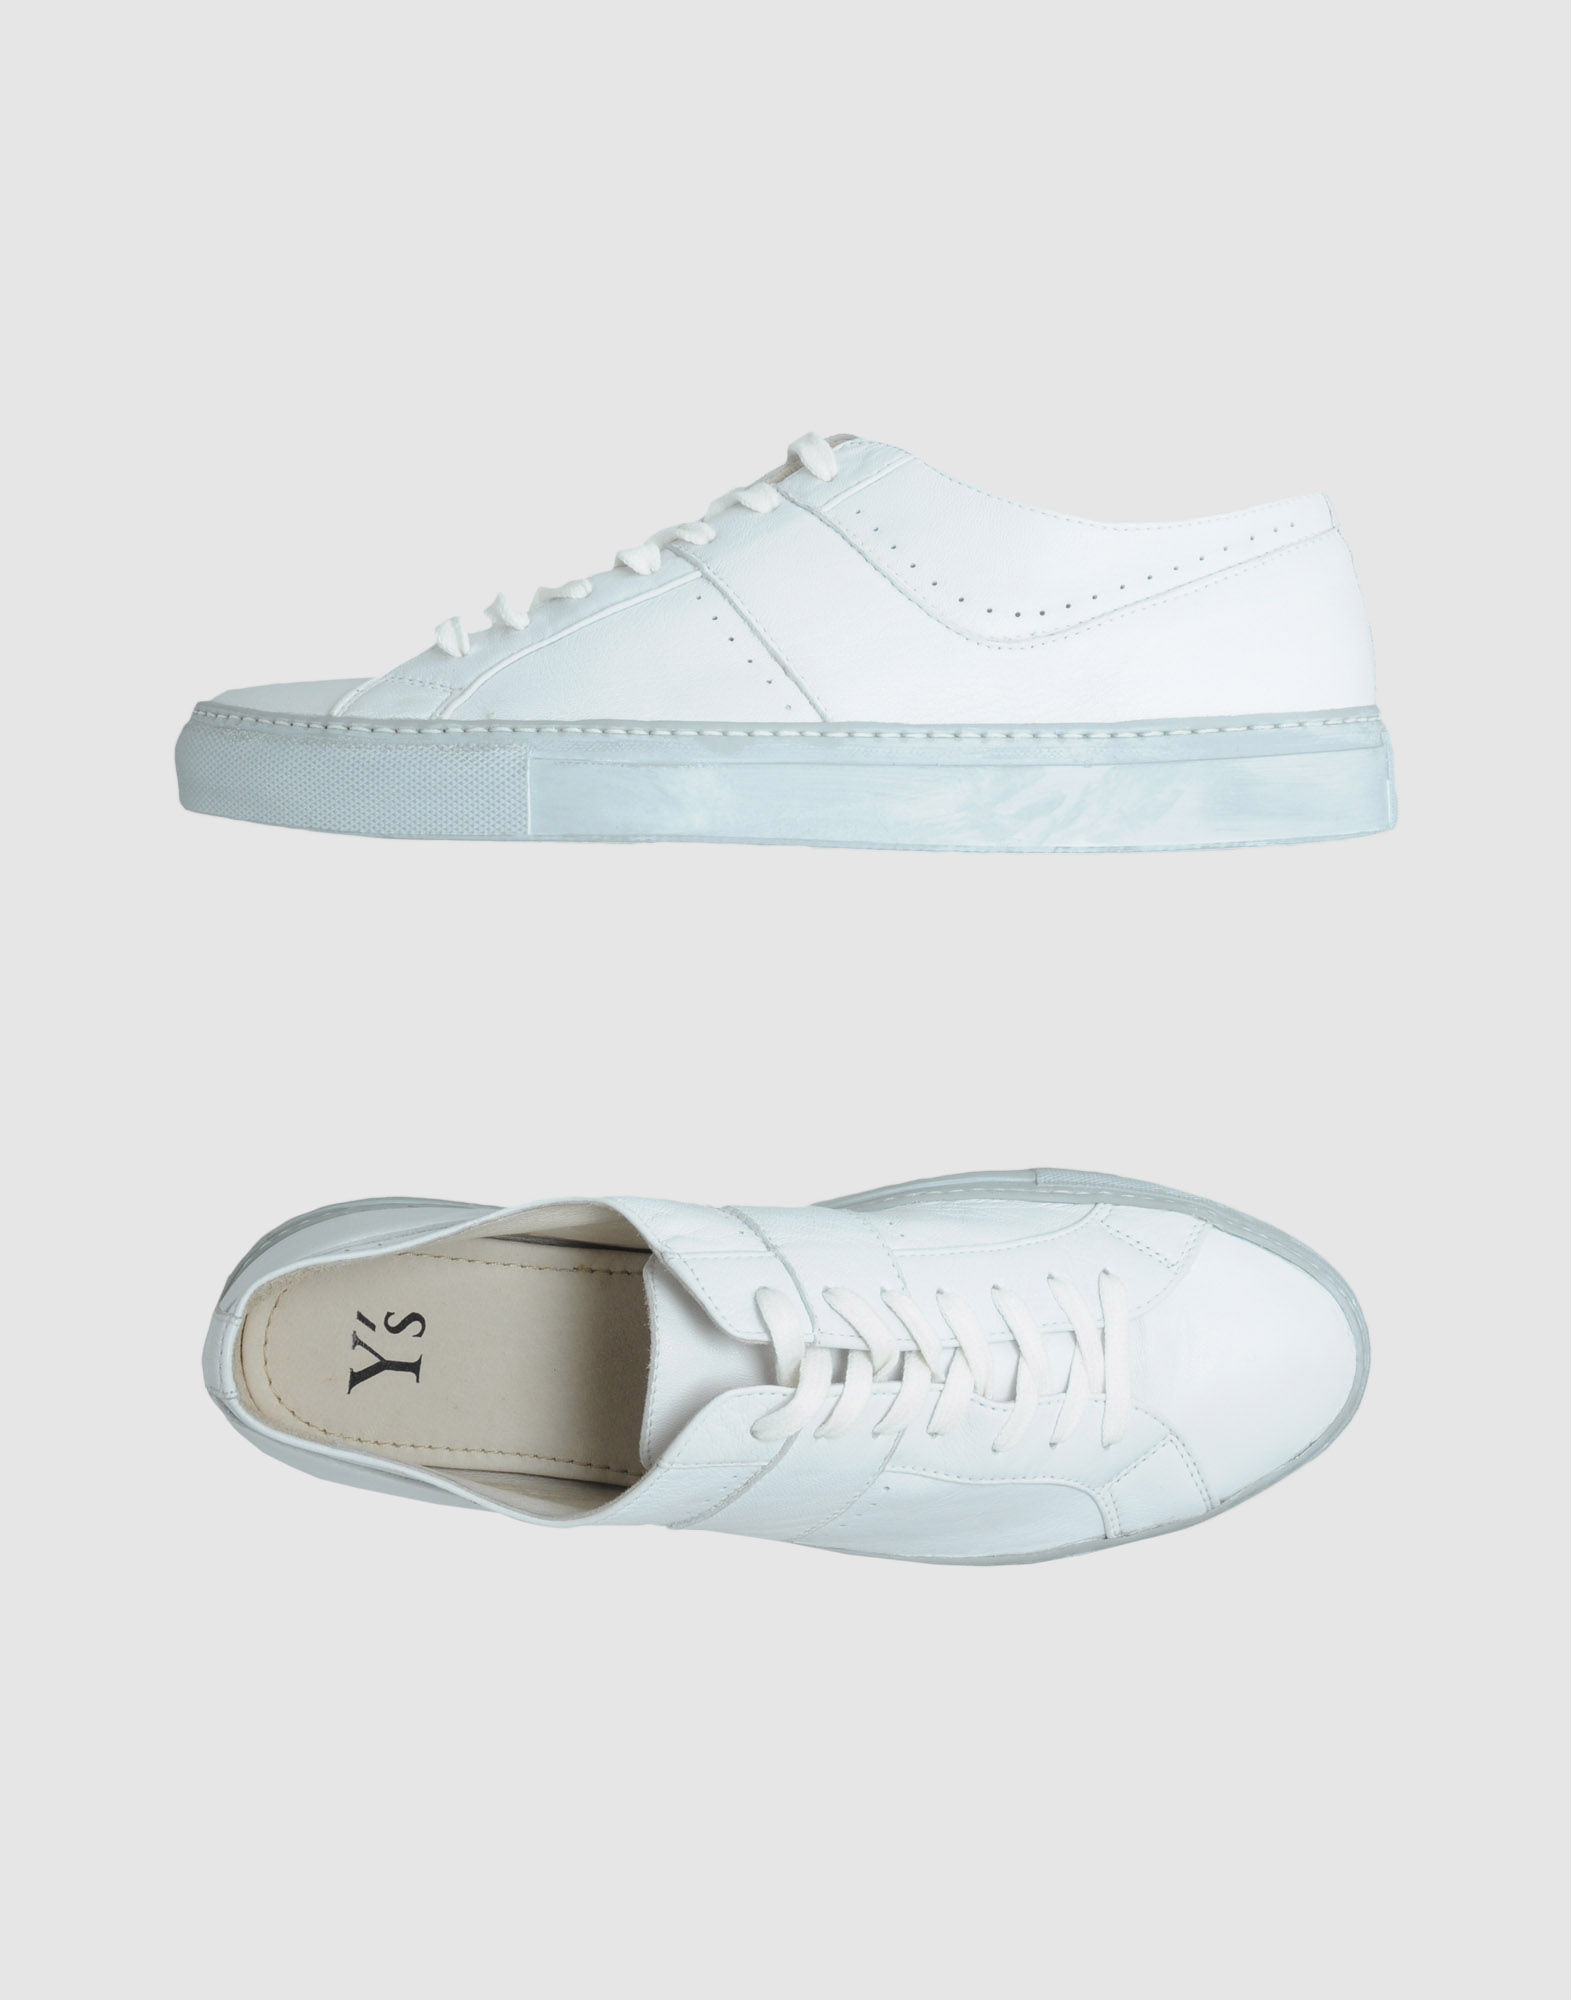 ys-yohji-yamamoto-white-sneakers-product